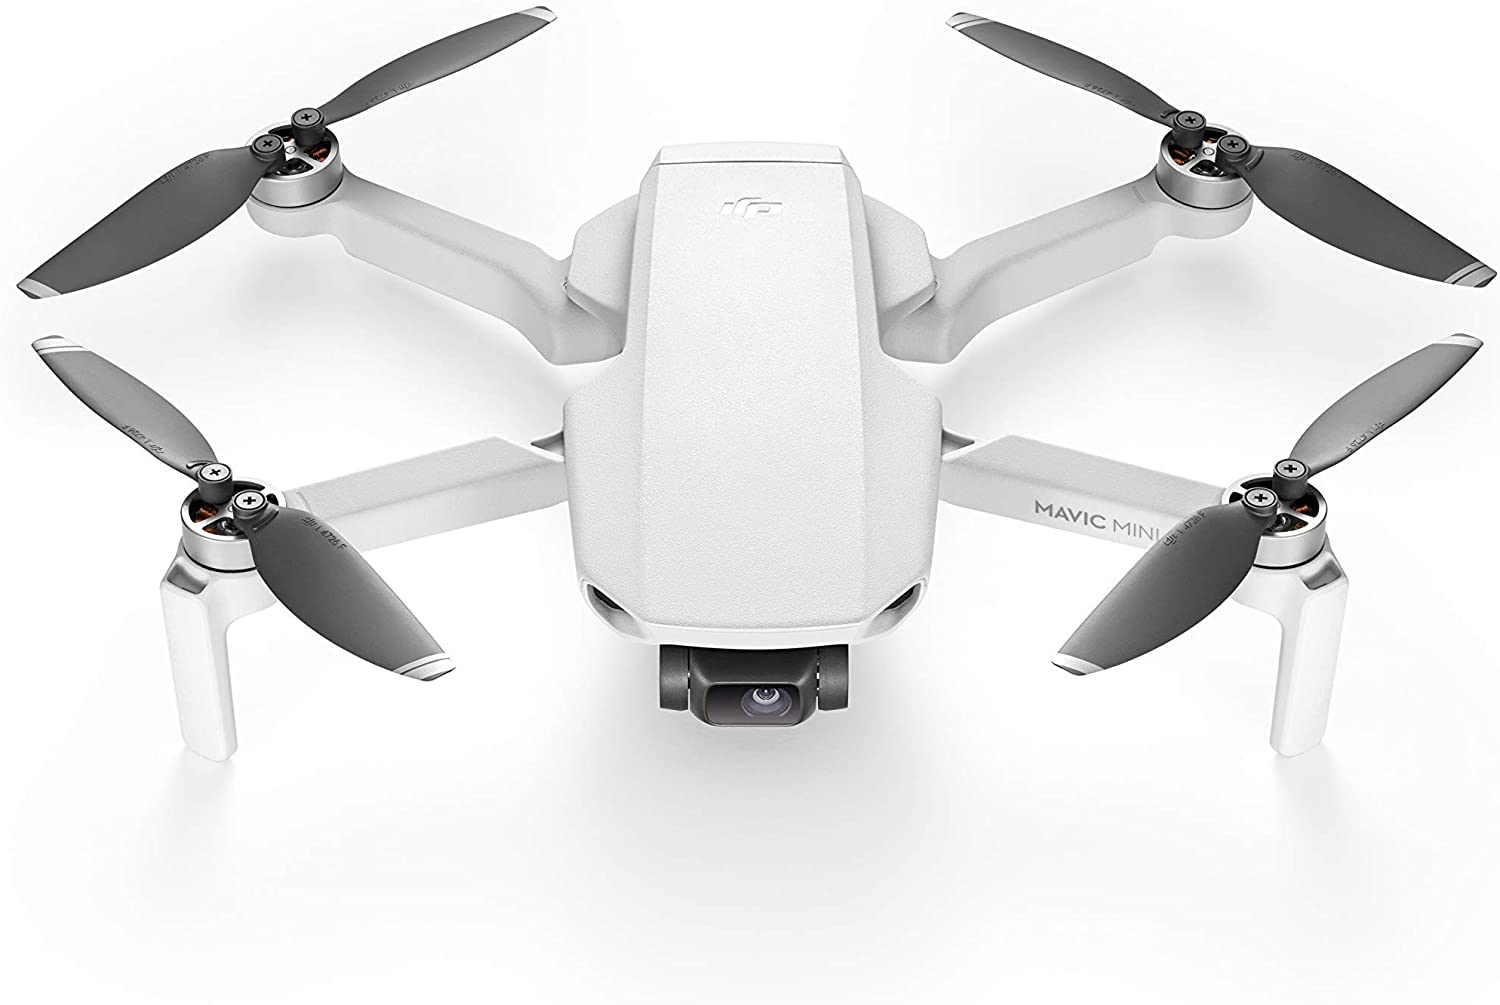 DJI Mavic Mini - Drone FlyCam Quadcopter UAV with 2.7K Camera 3-Axis